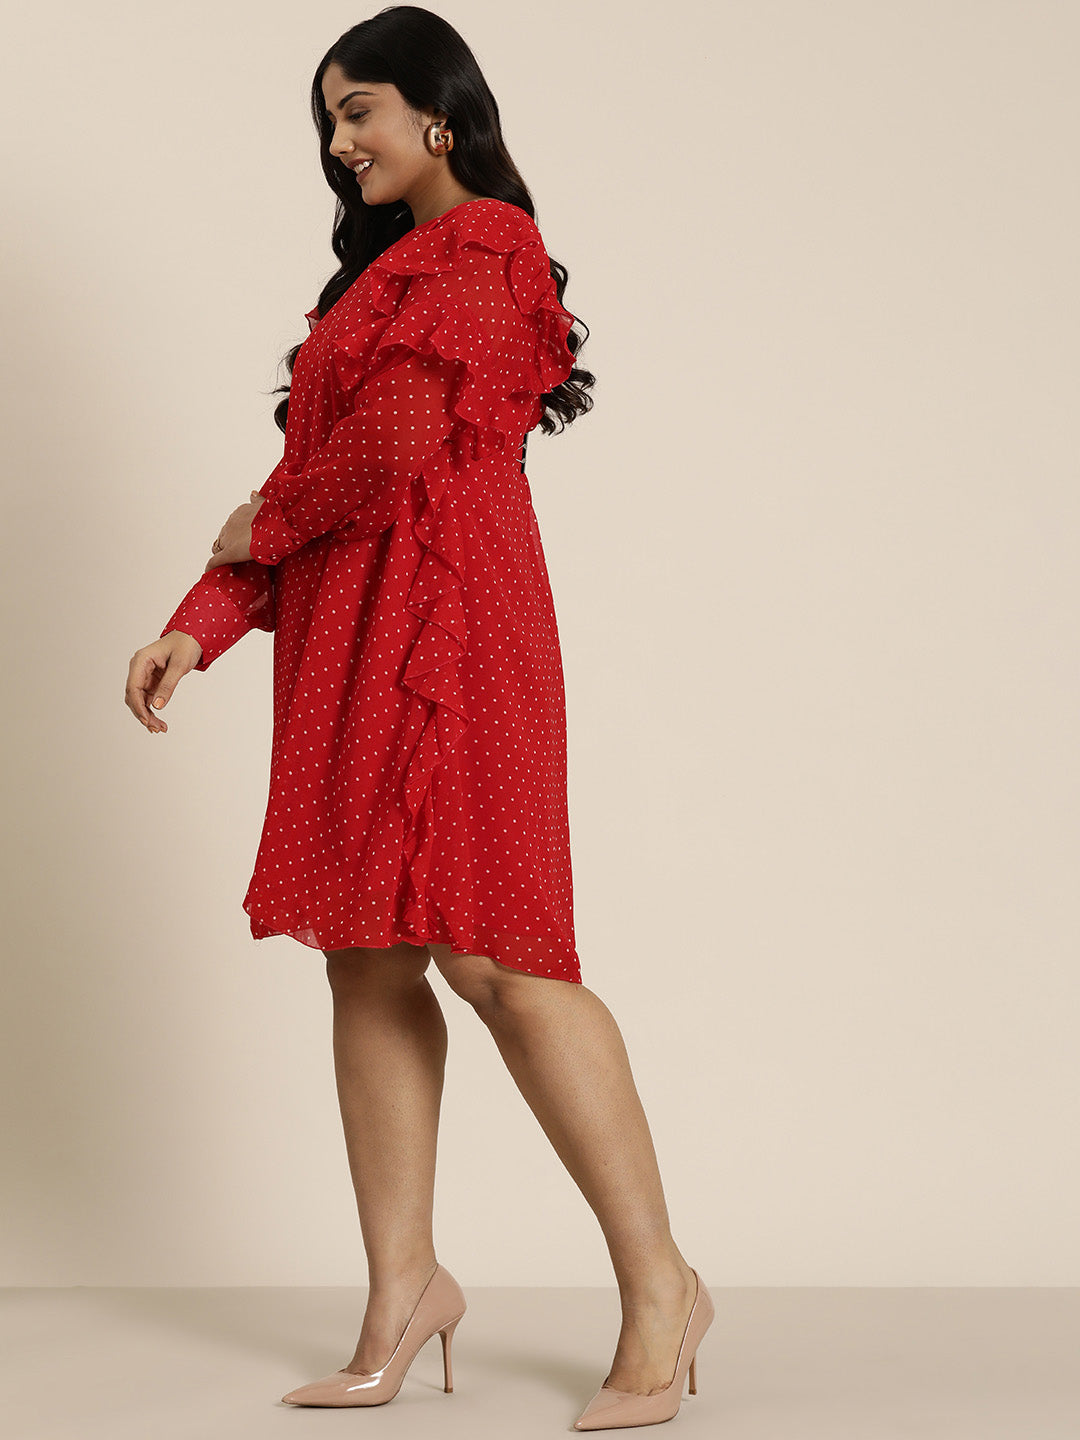 Red small polka dress